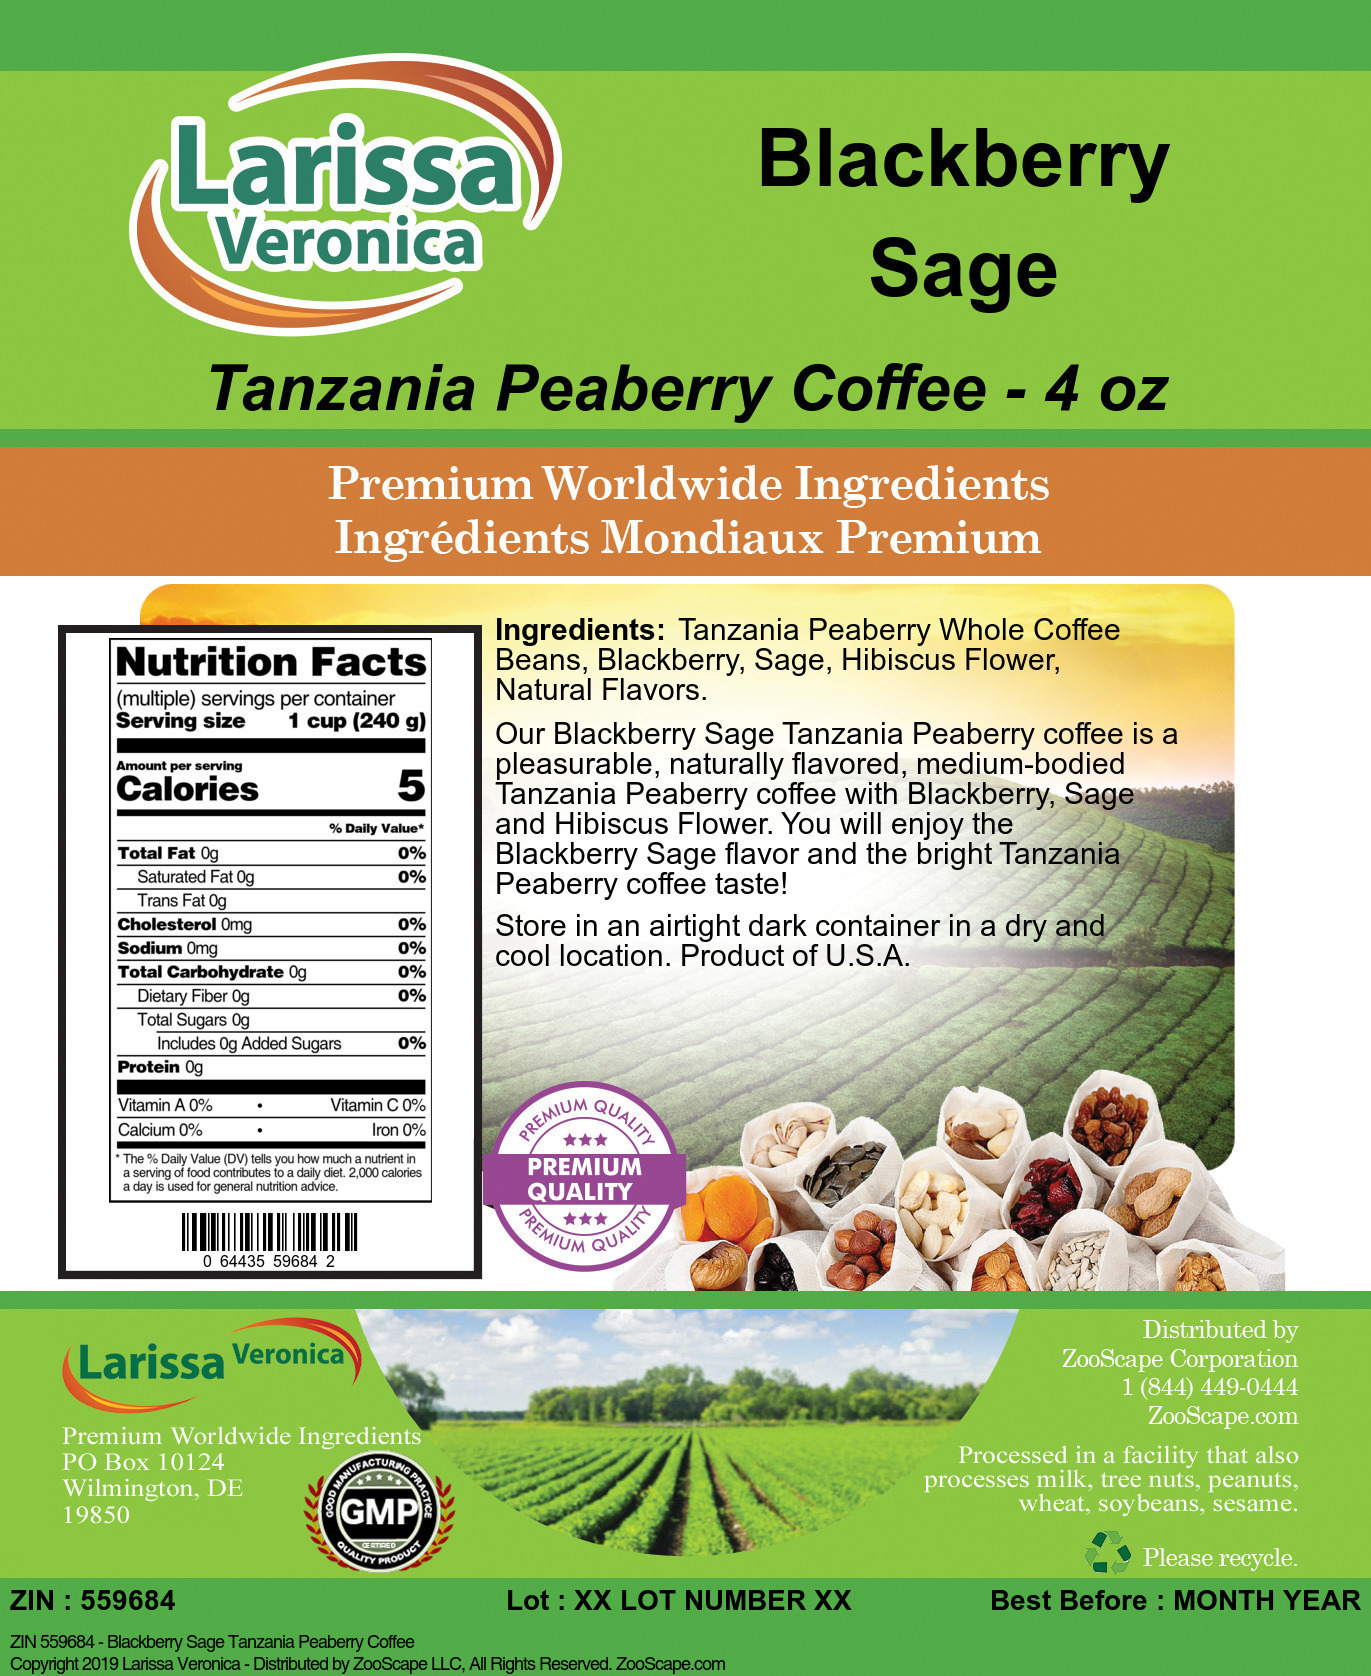 Blackberry Sage Tanzania Peaberry Coffee - Label